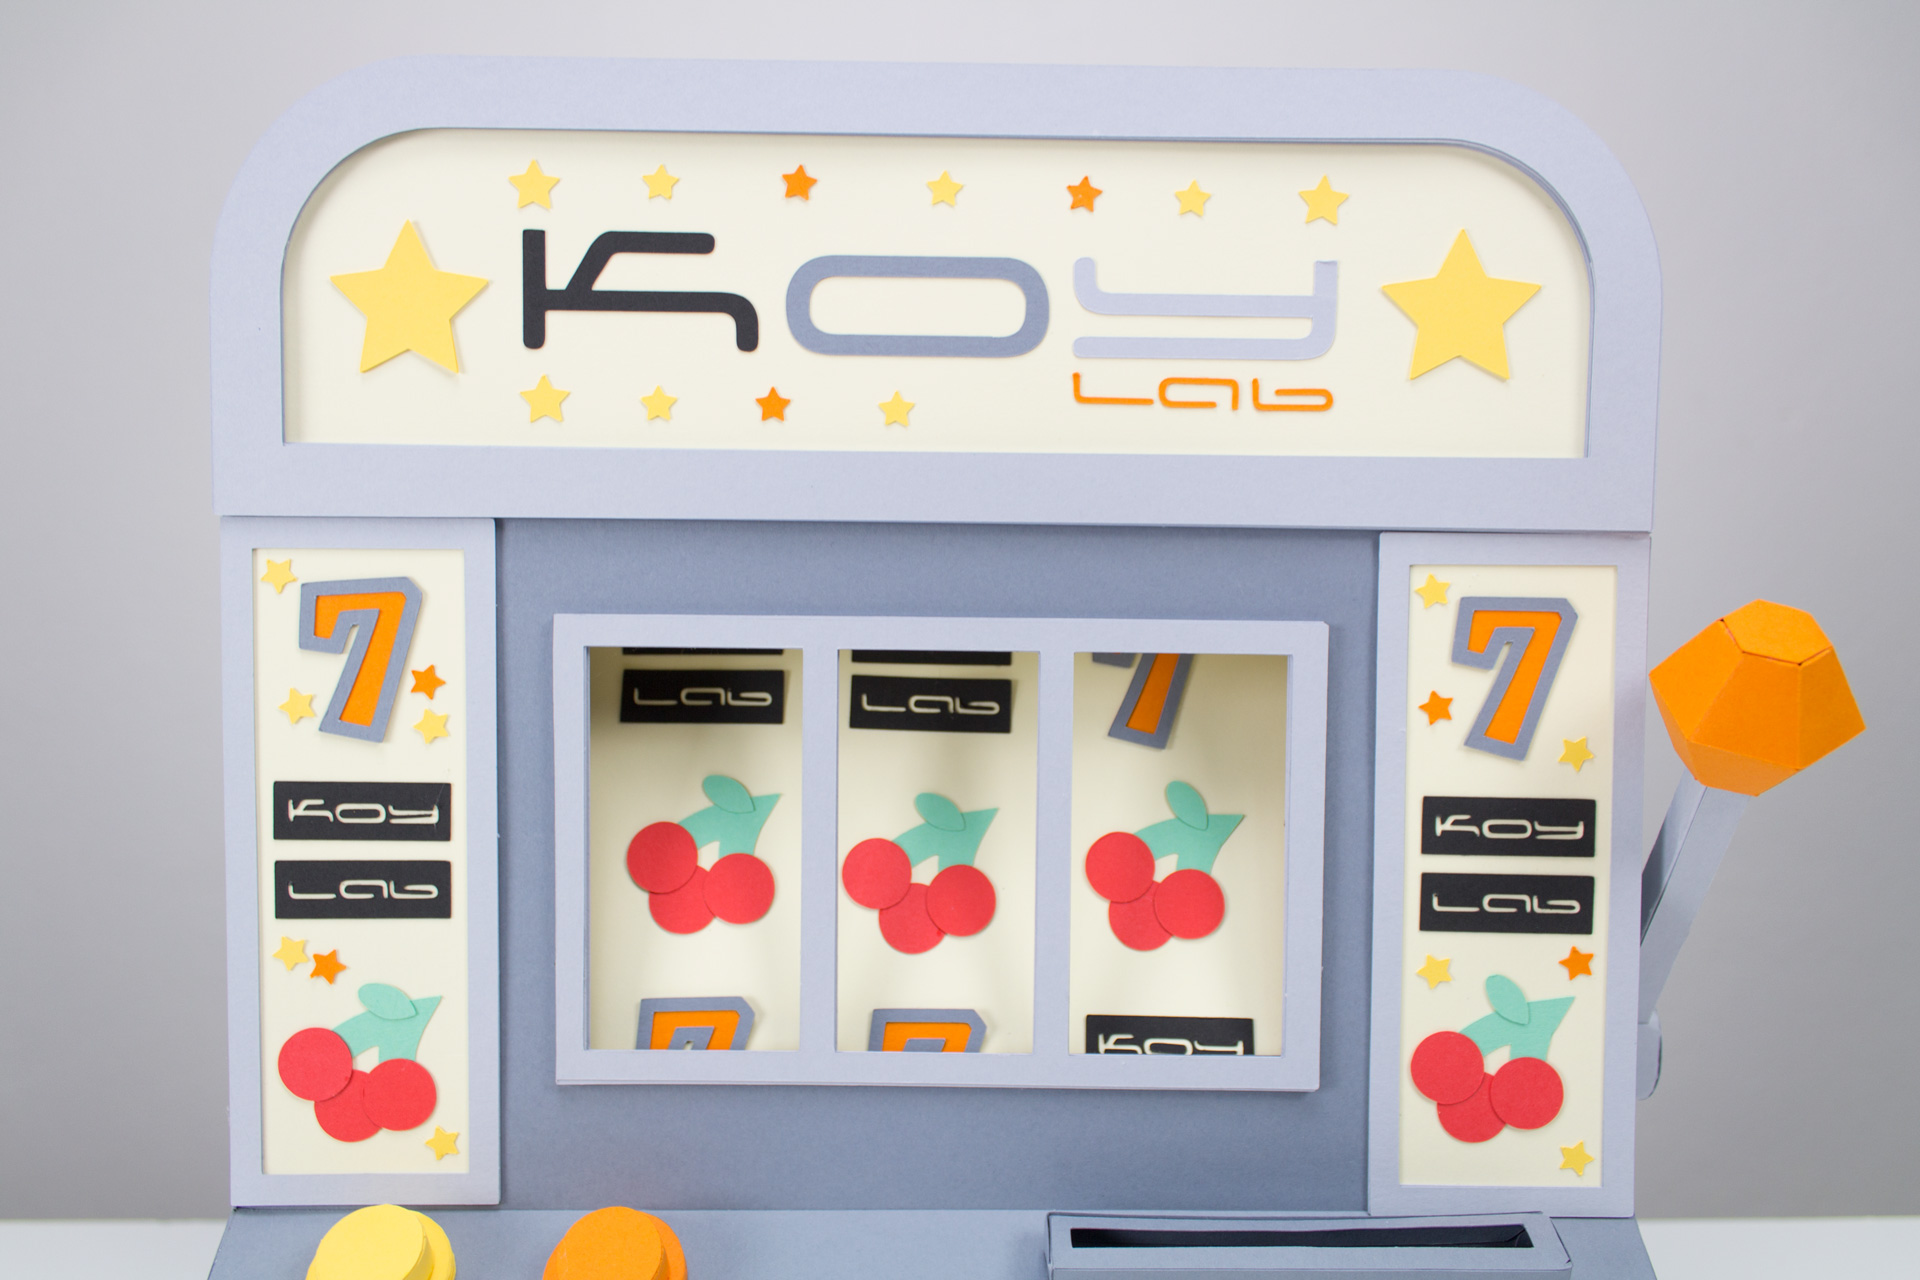 The Lab Slot Machine